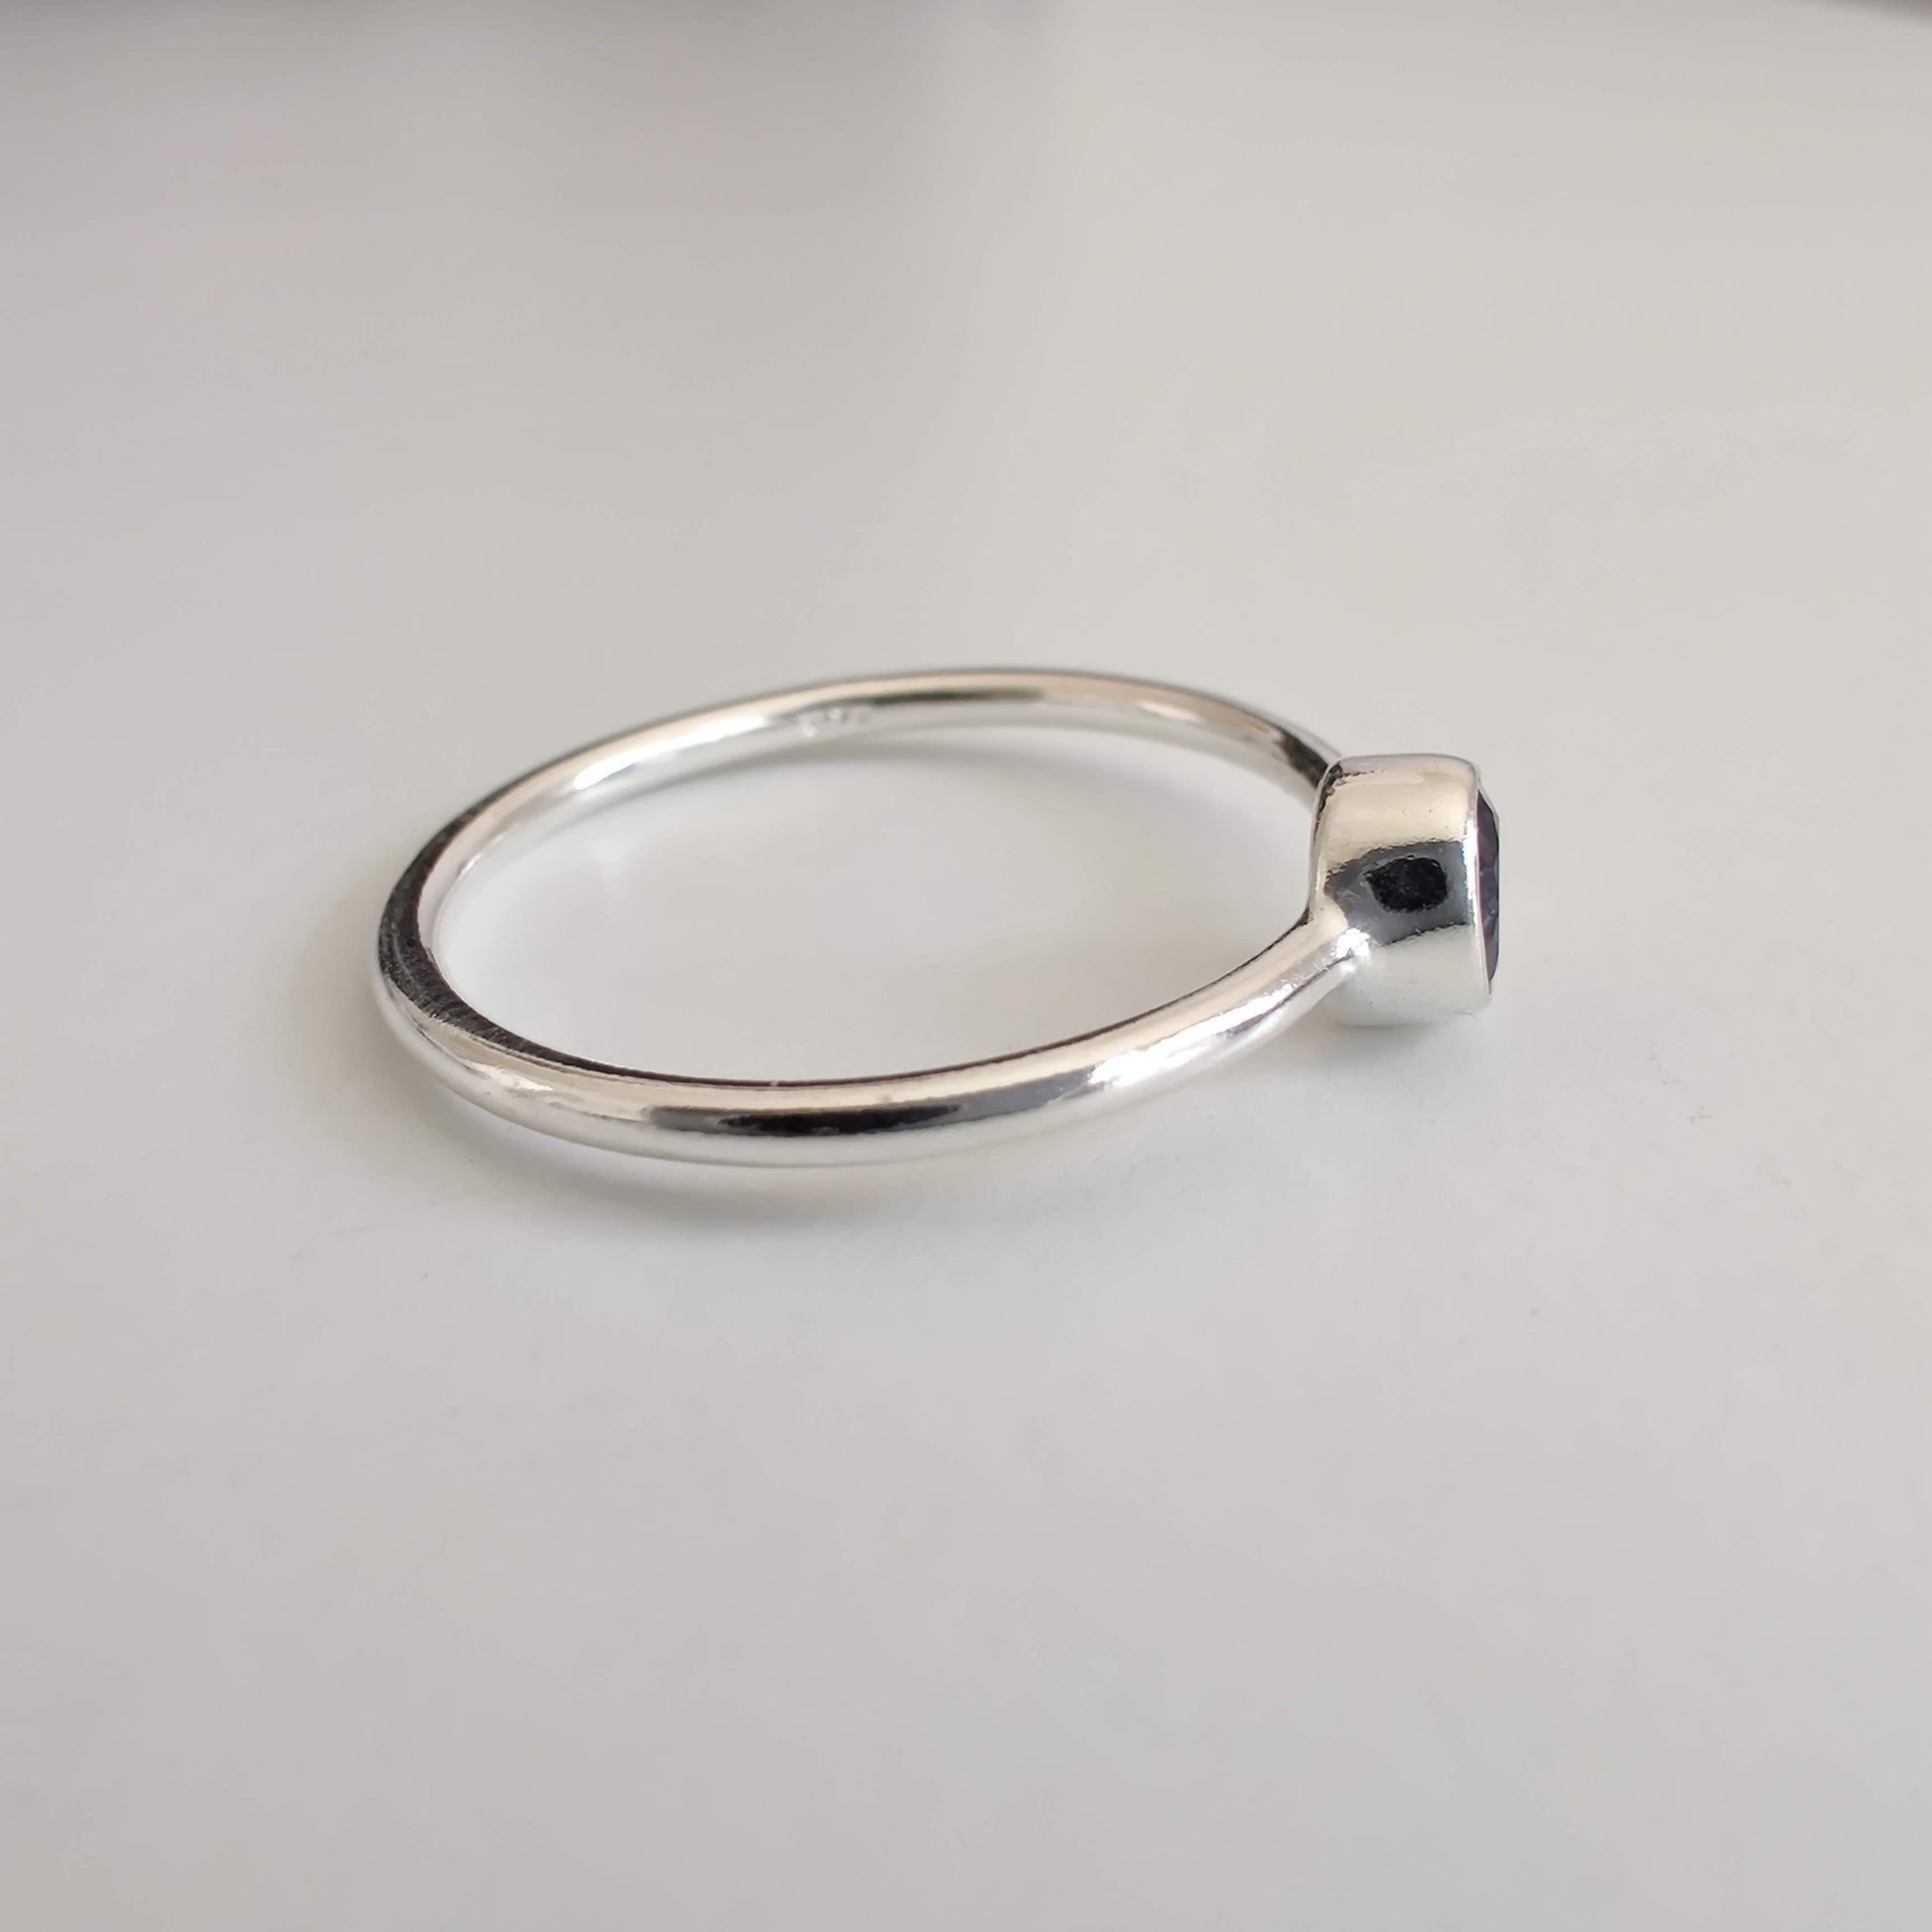 Iolite Delicate 925 Sterling Silver Ring - Rivendell Shop